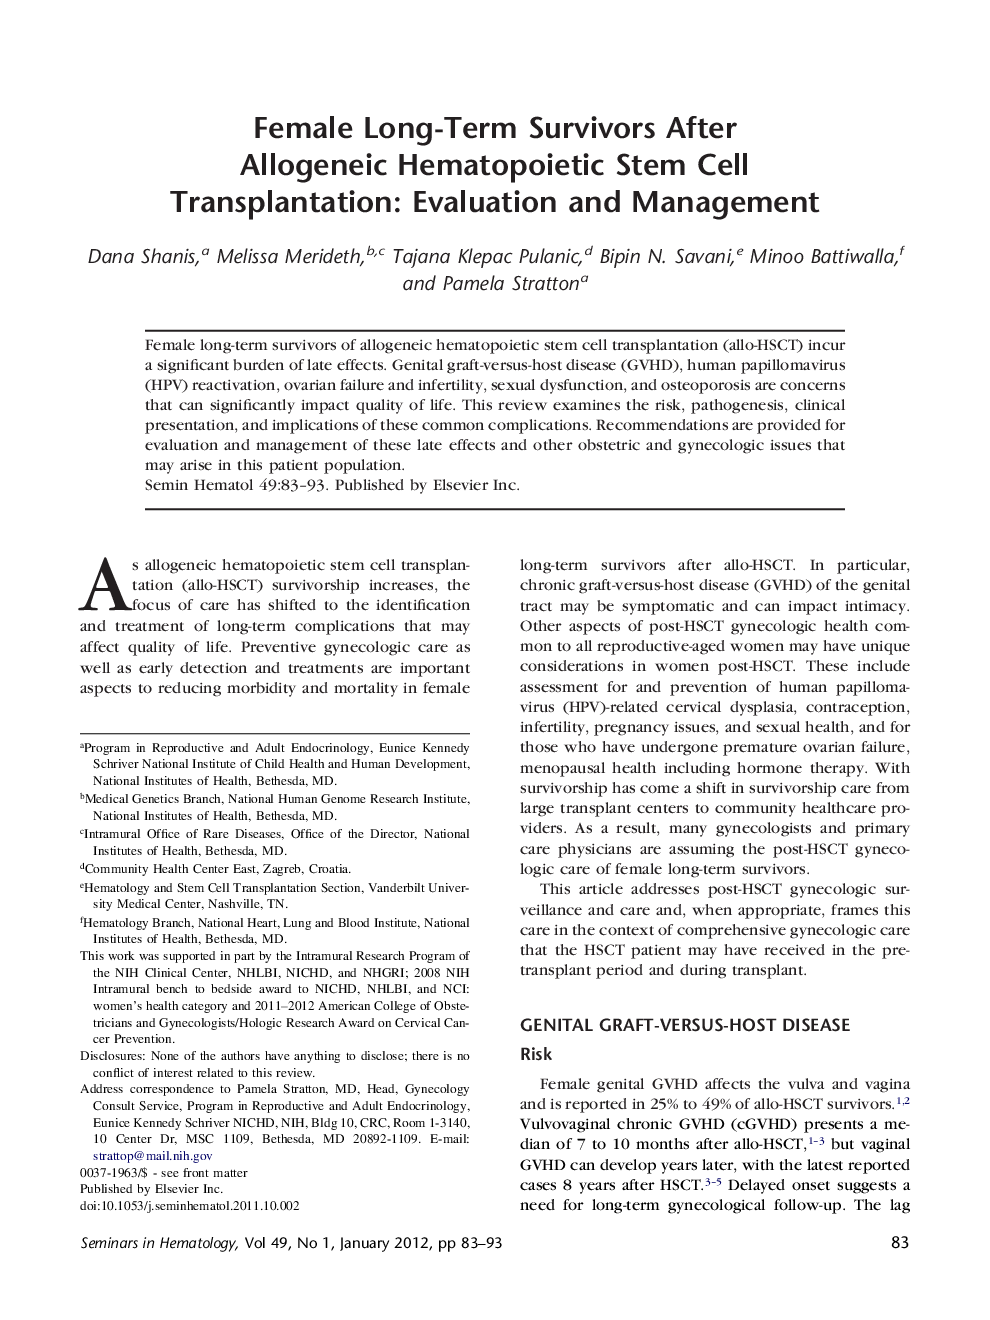 Female Long-Term Survivors After Allogeneic Hematopoietic Stem Cell Transplantation: Evaluation and Management 